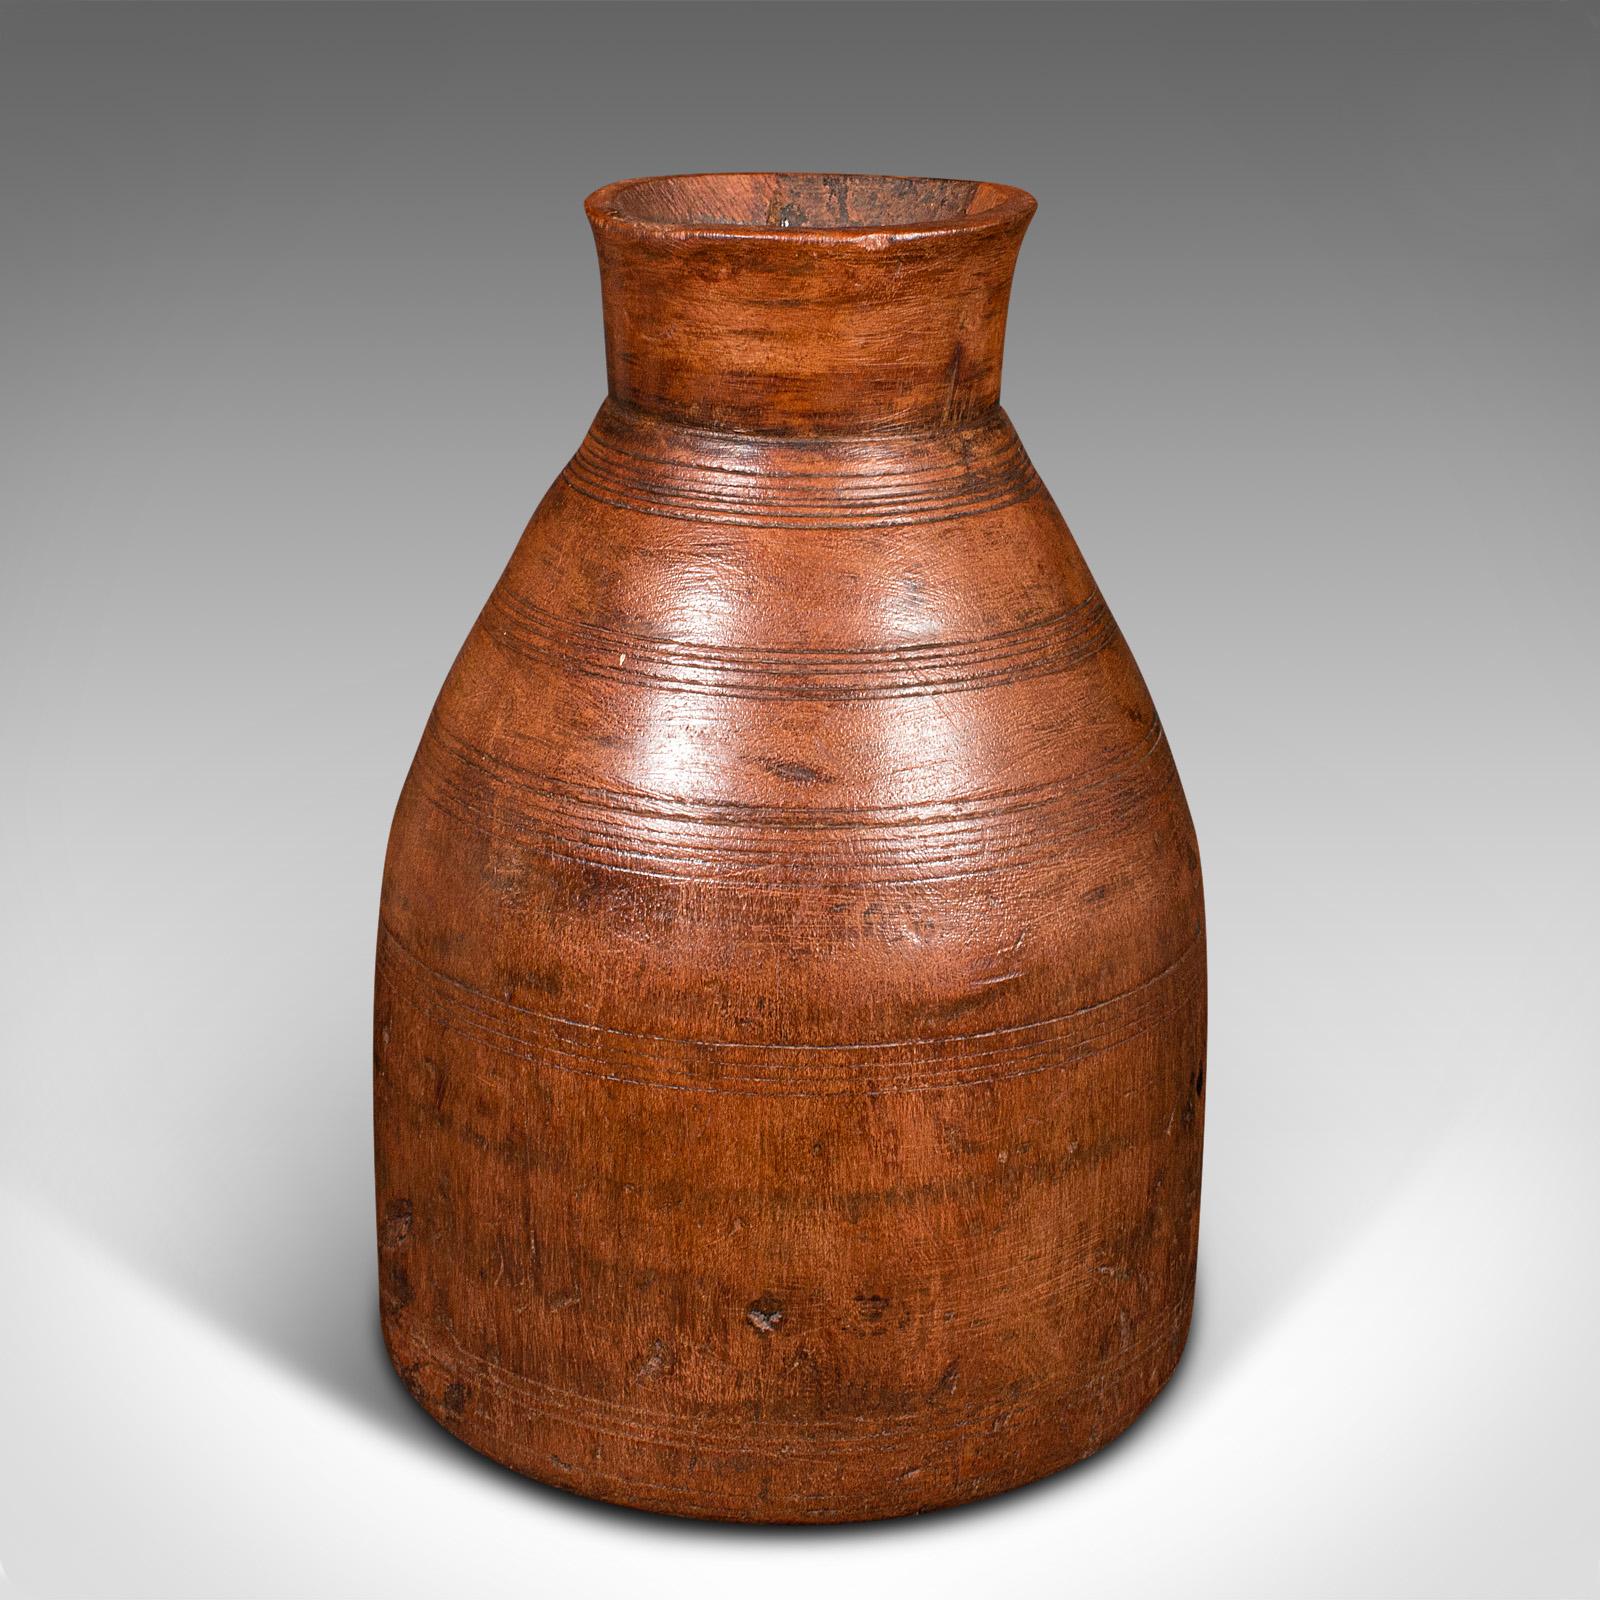 Set of 3 Antique Tribal Vases, Indian, Hardwood, Rustic, Jars, Urns, Victorian 1